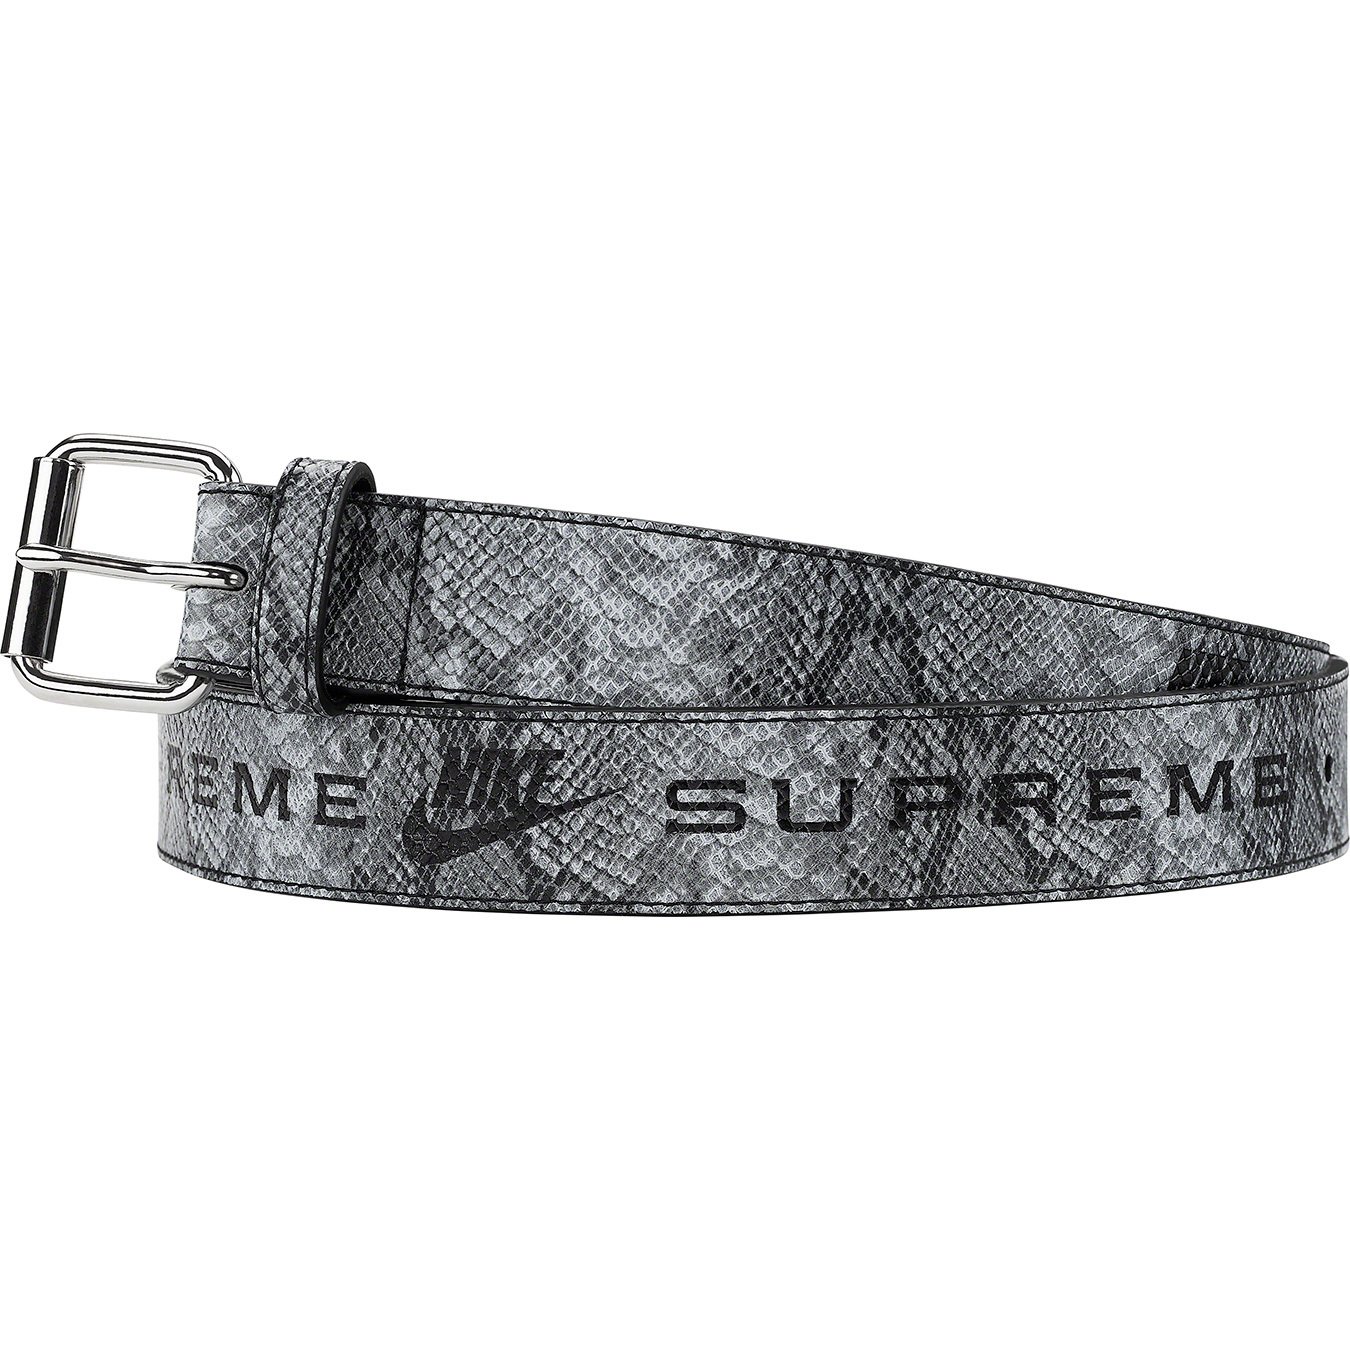 Supreme®/Nike® Snakeskin Belt - Supreme Community